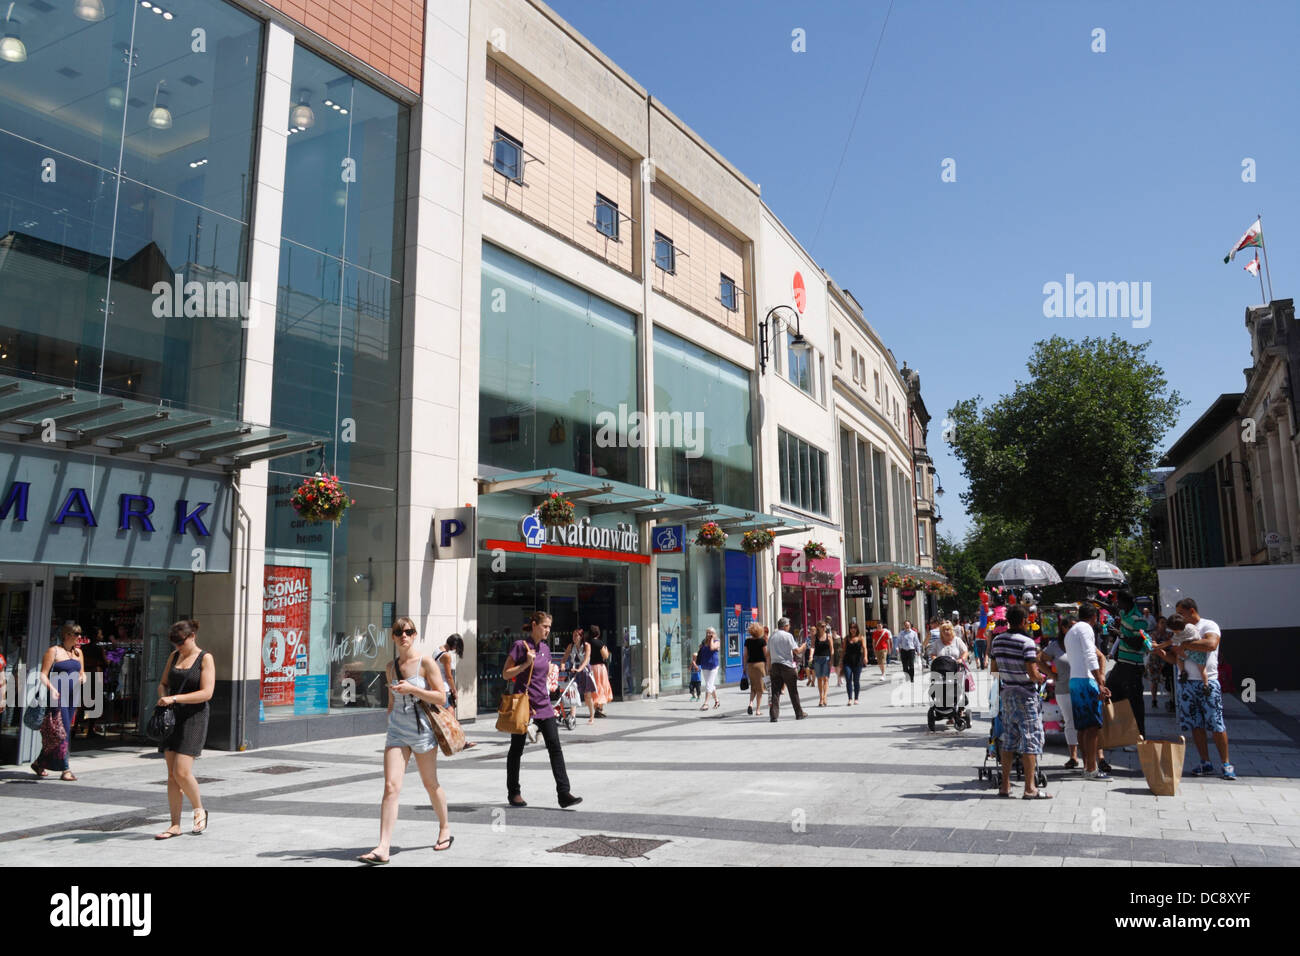 People Shoppers walking along Queen Street in Cardiff city centre Wales UK. Streetscene Pedestrian street Stock Photo